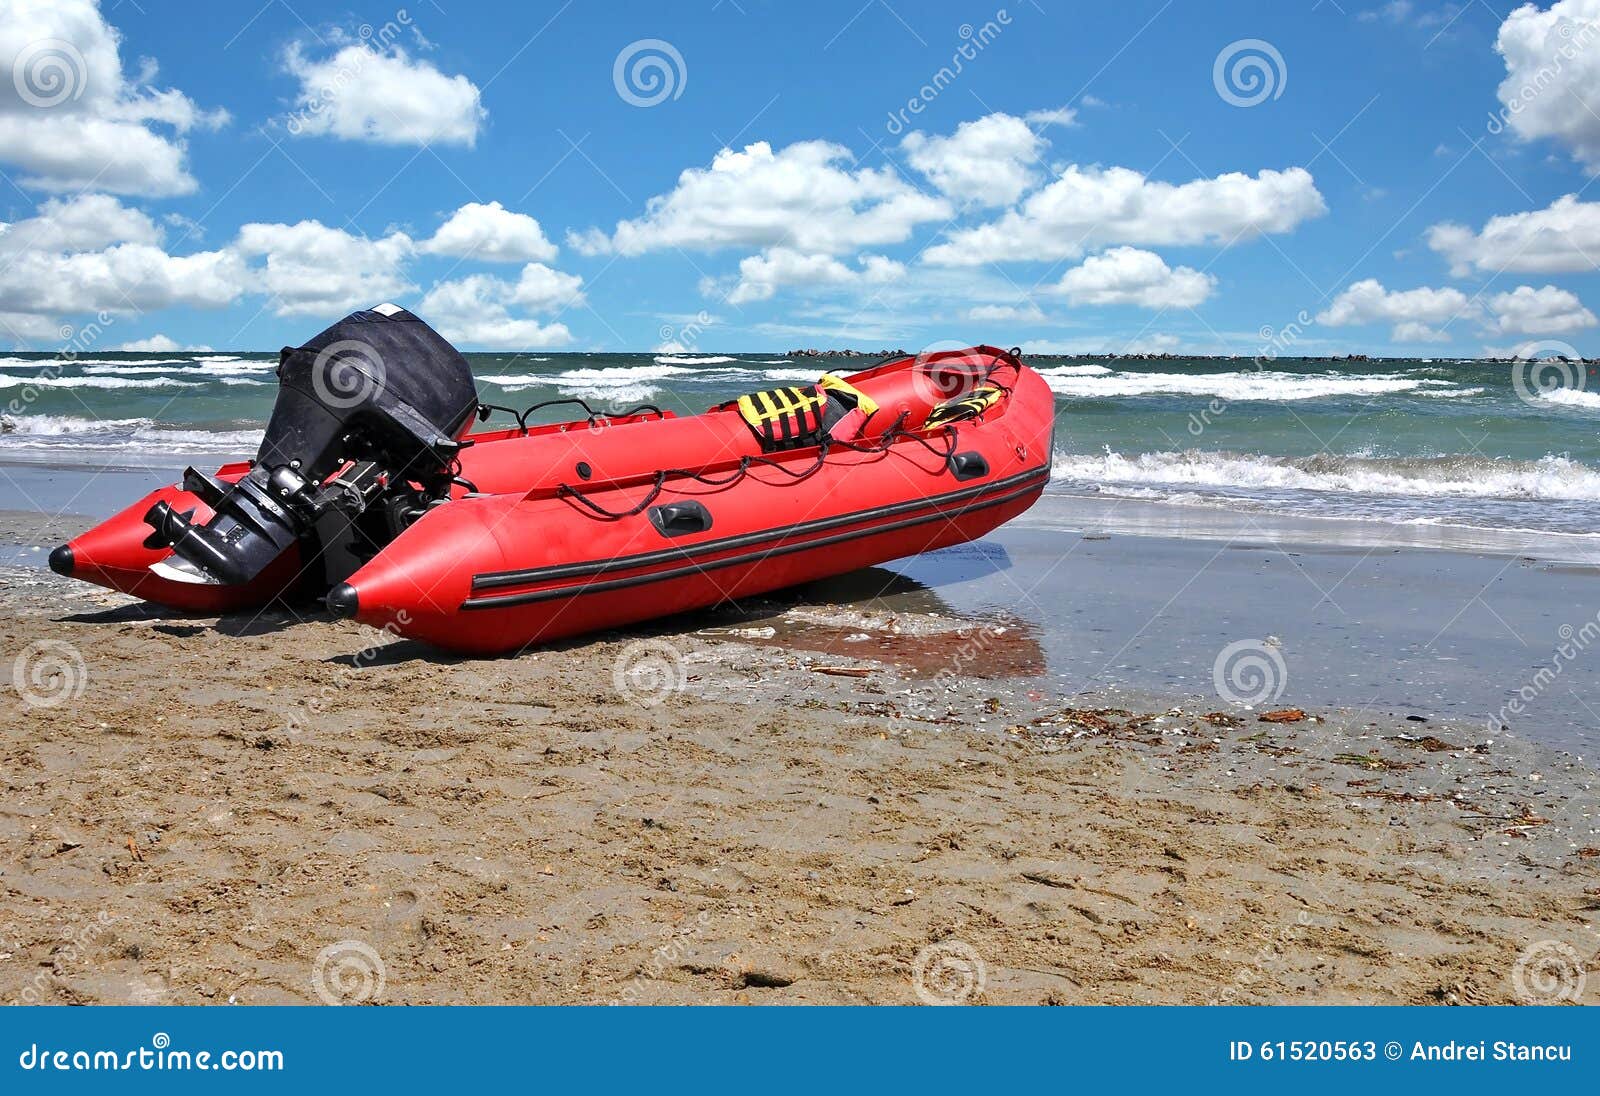 Rubber lifeguard boat stock image. Image of seaside, coastal - 61520563